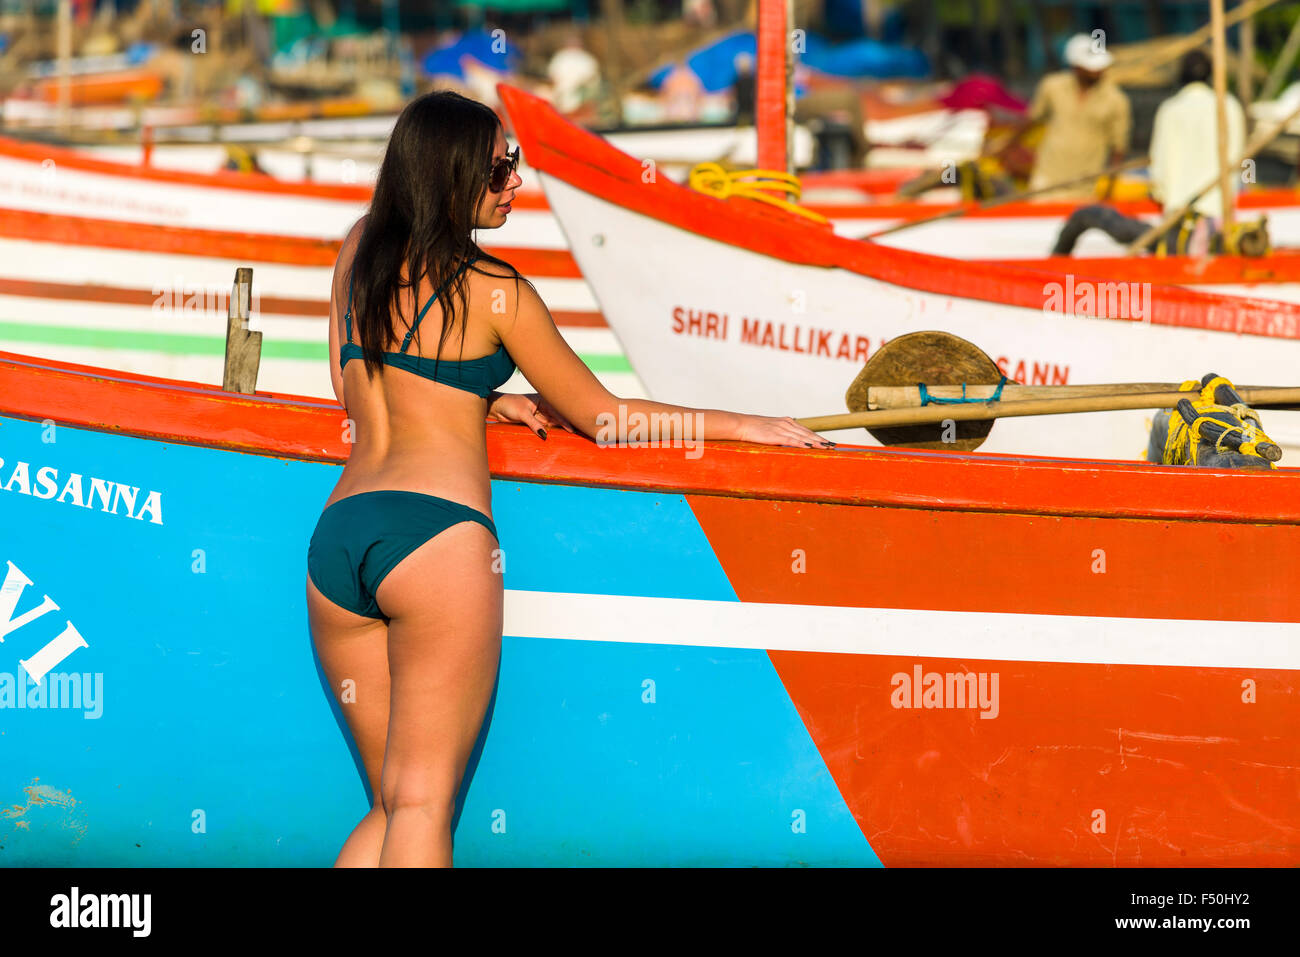 Woman fishing bikini hi-res stock photography and images - Alamy